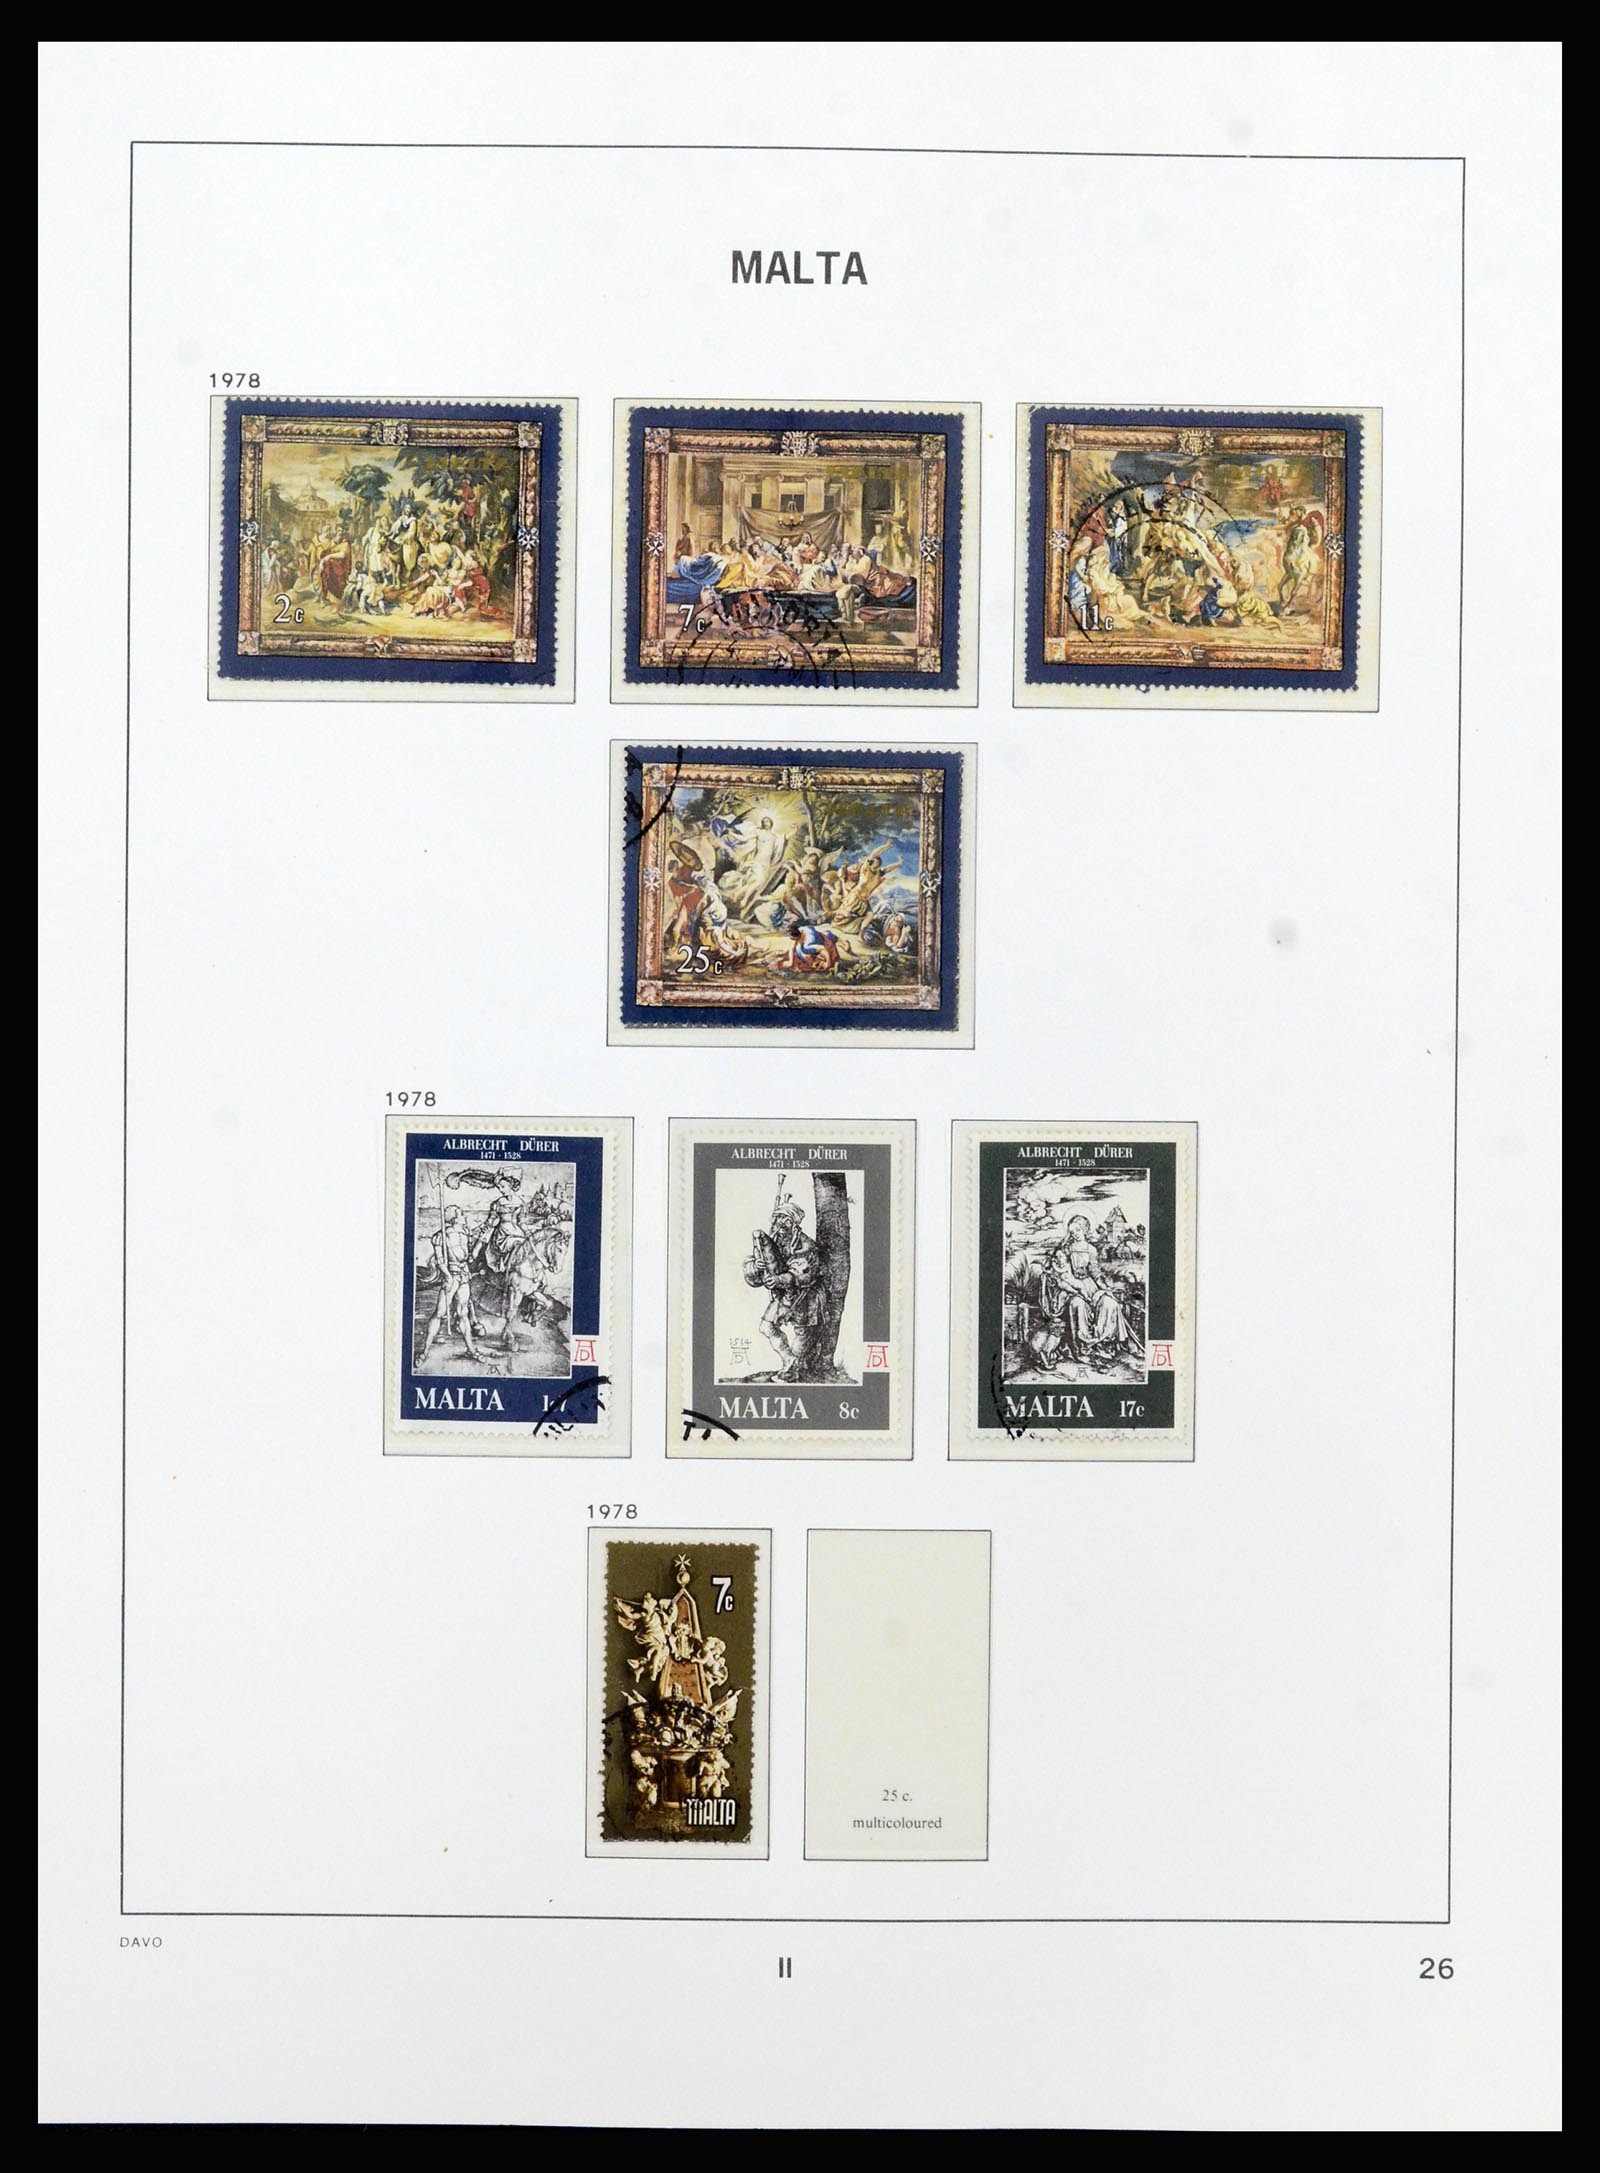 37212 050 - Stamp collection 37212 Malta 1863-1989.